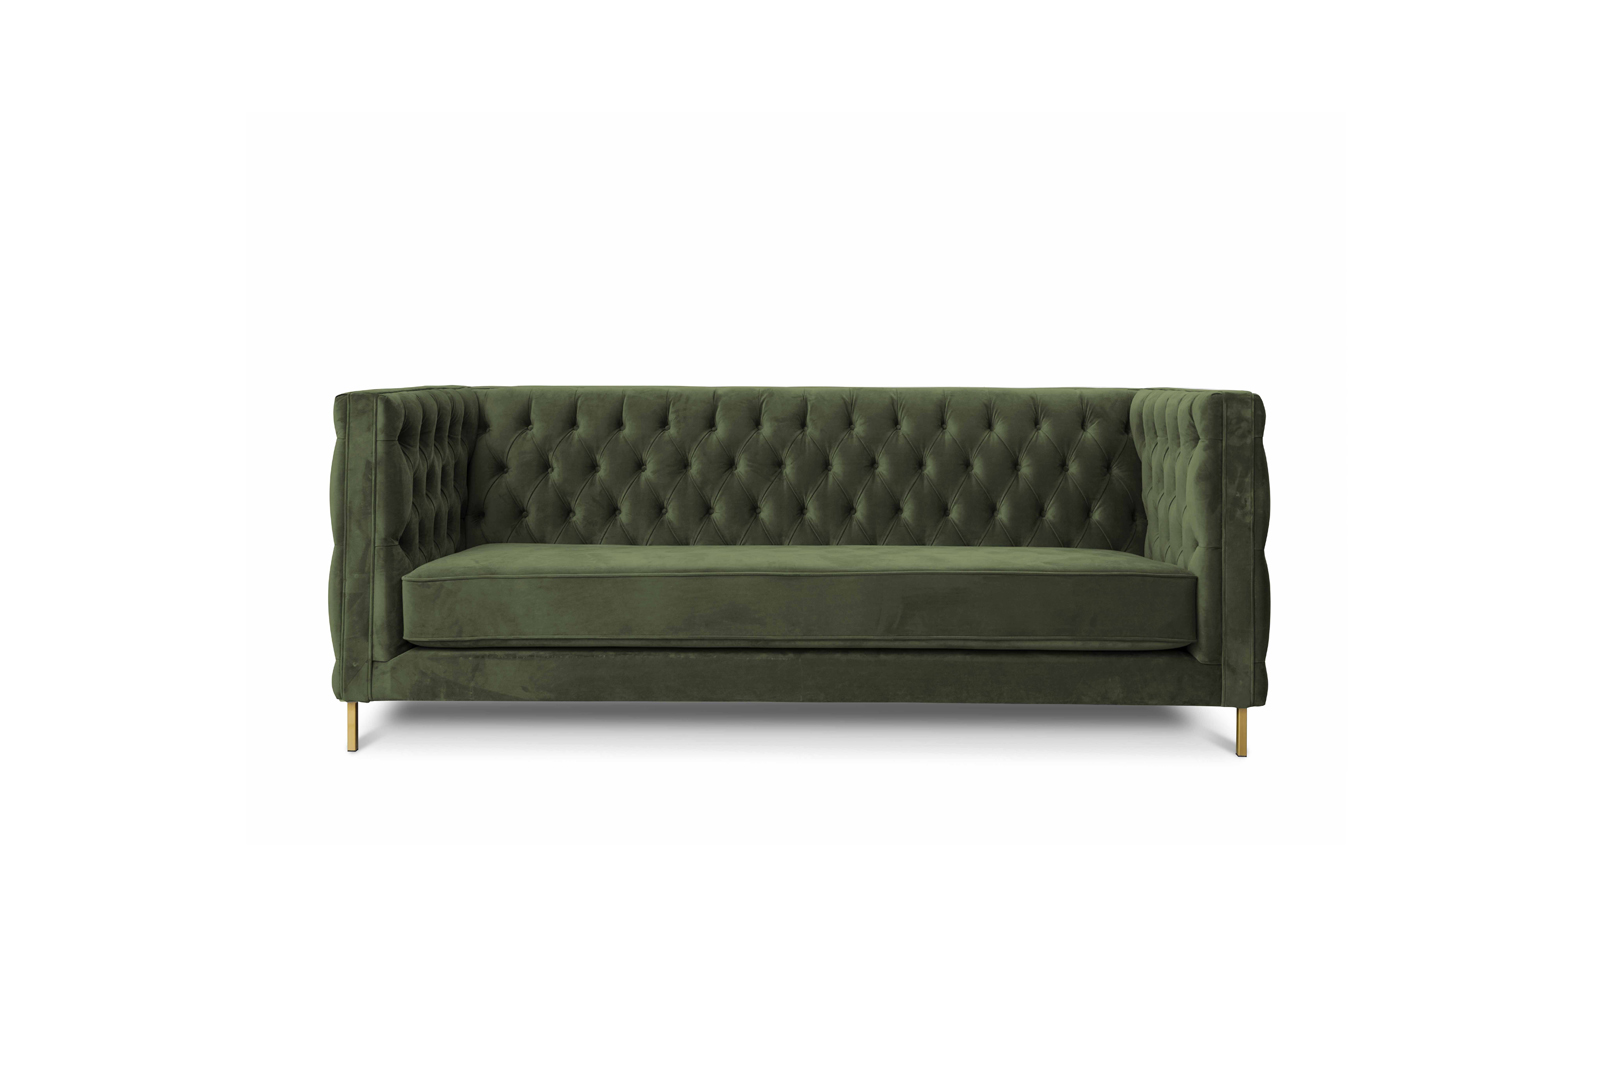 The MELFI 3 bottle green sofa